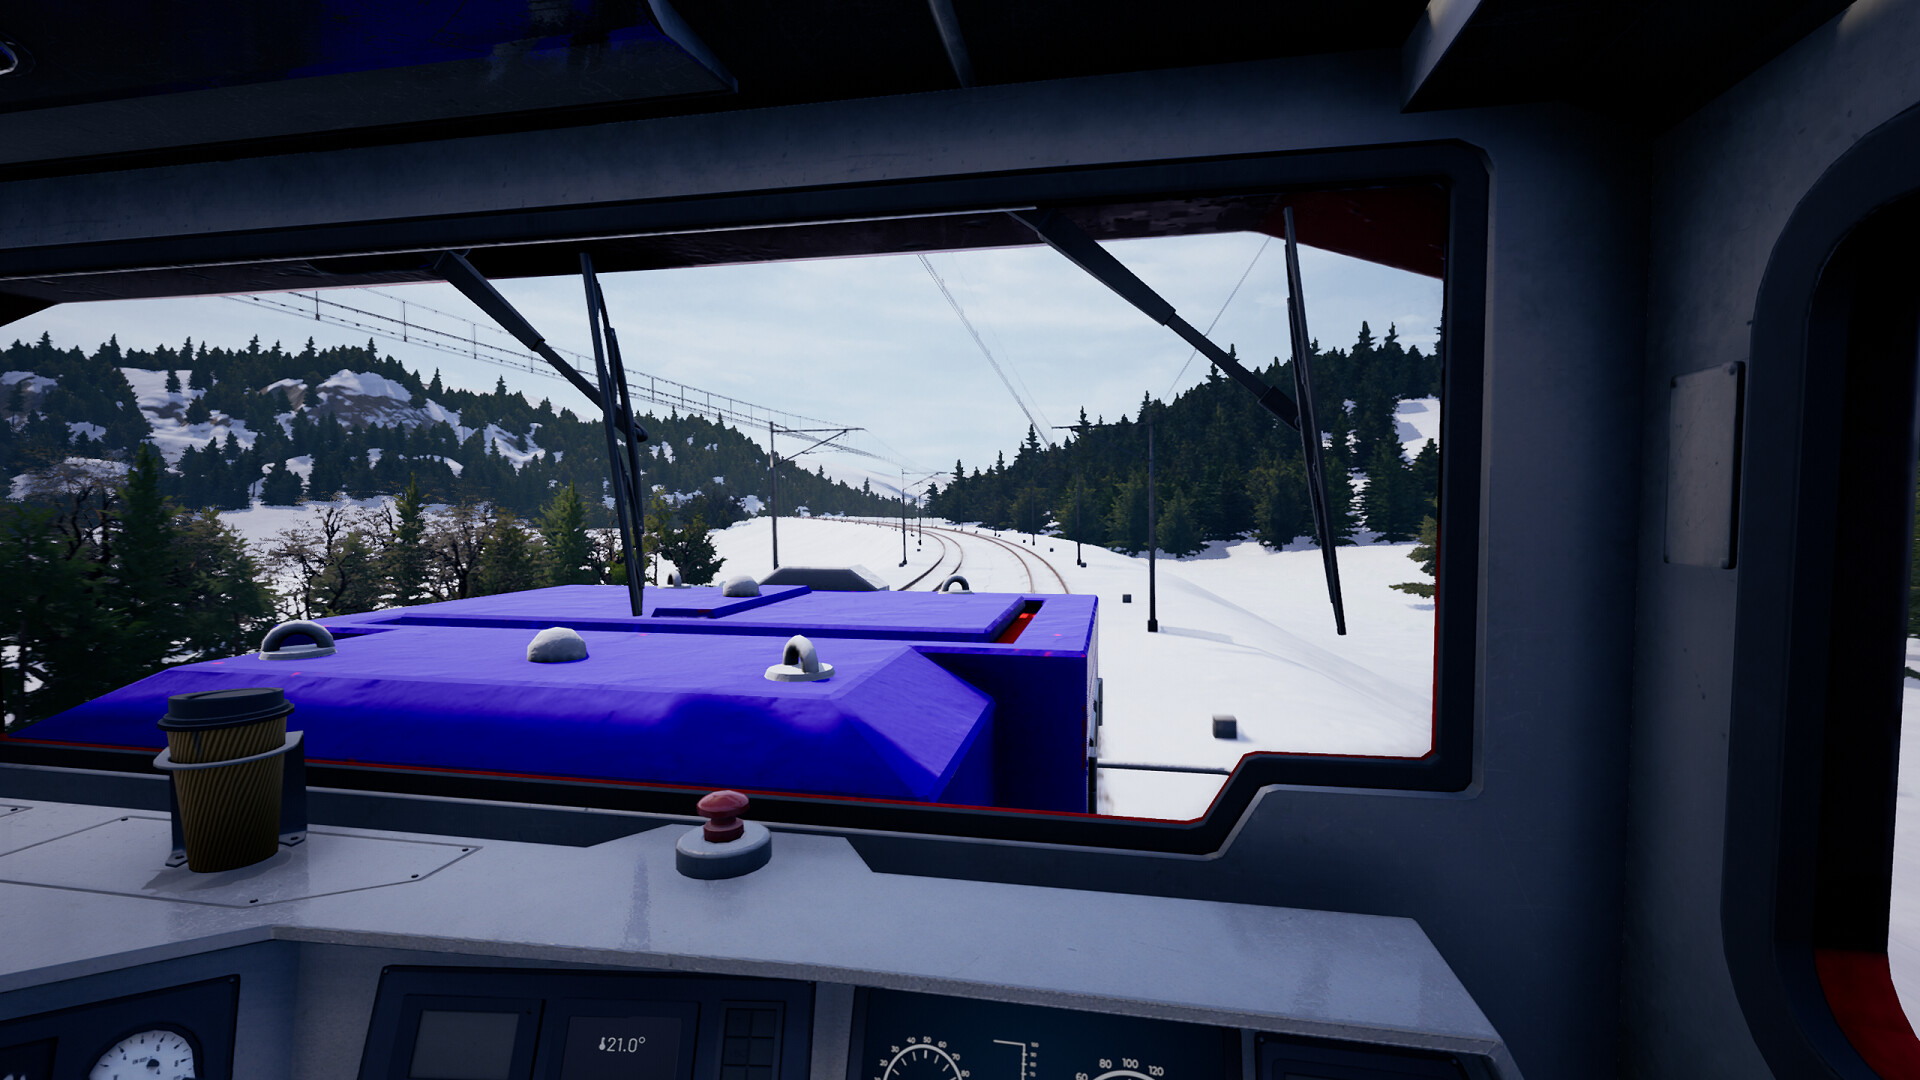 Train Life: A Railway Simulator - screenshot 3